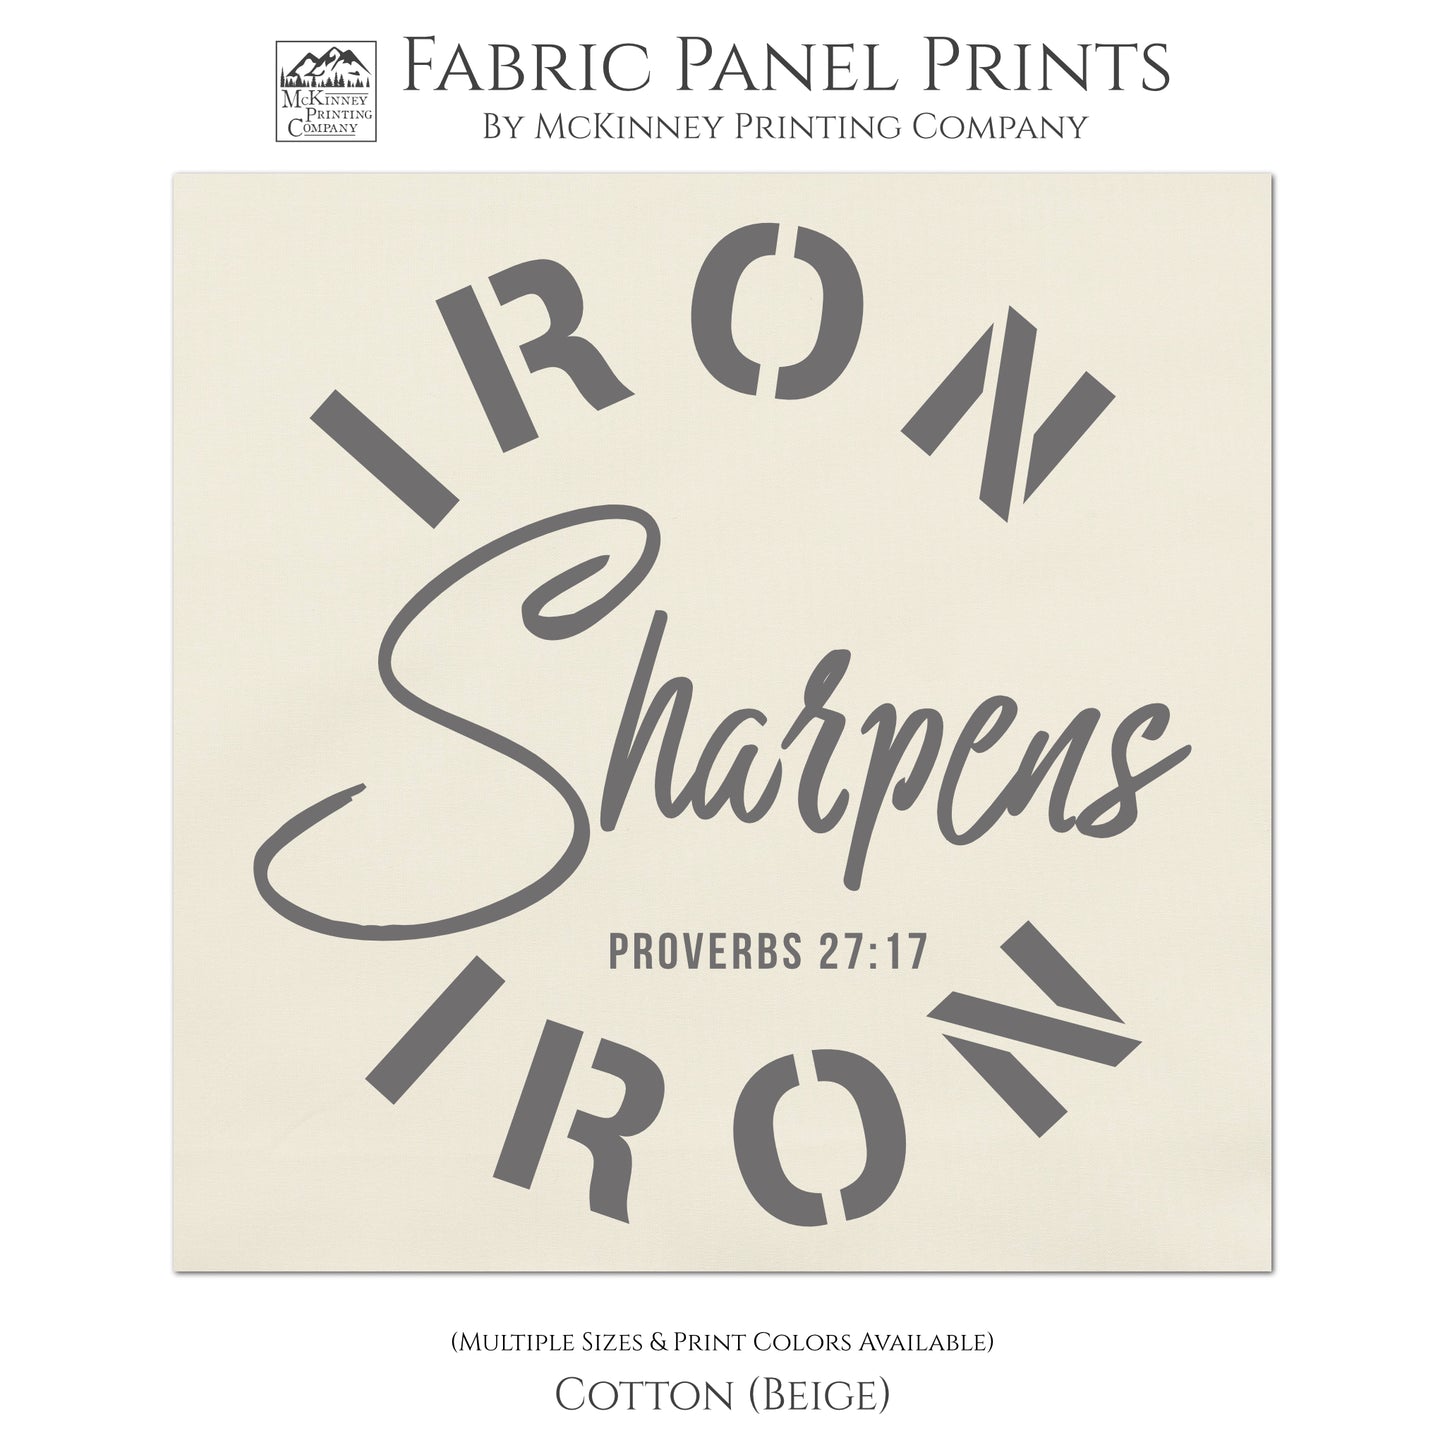 Iron Sharpens Iron - Proverbs 27:17 - Religious Fabric, Bible Verse Wall Art, Quilt Block - Cotton